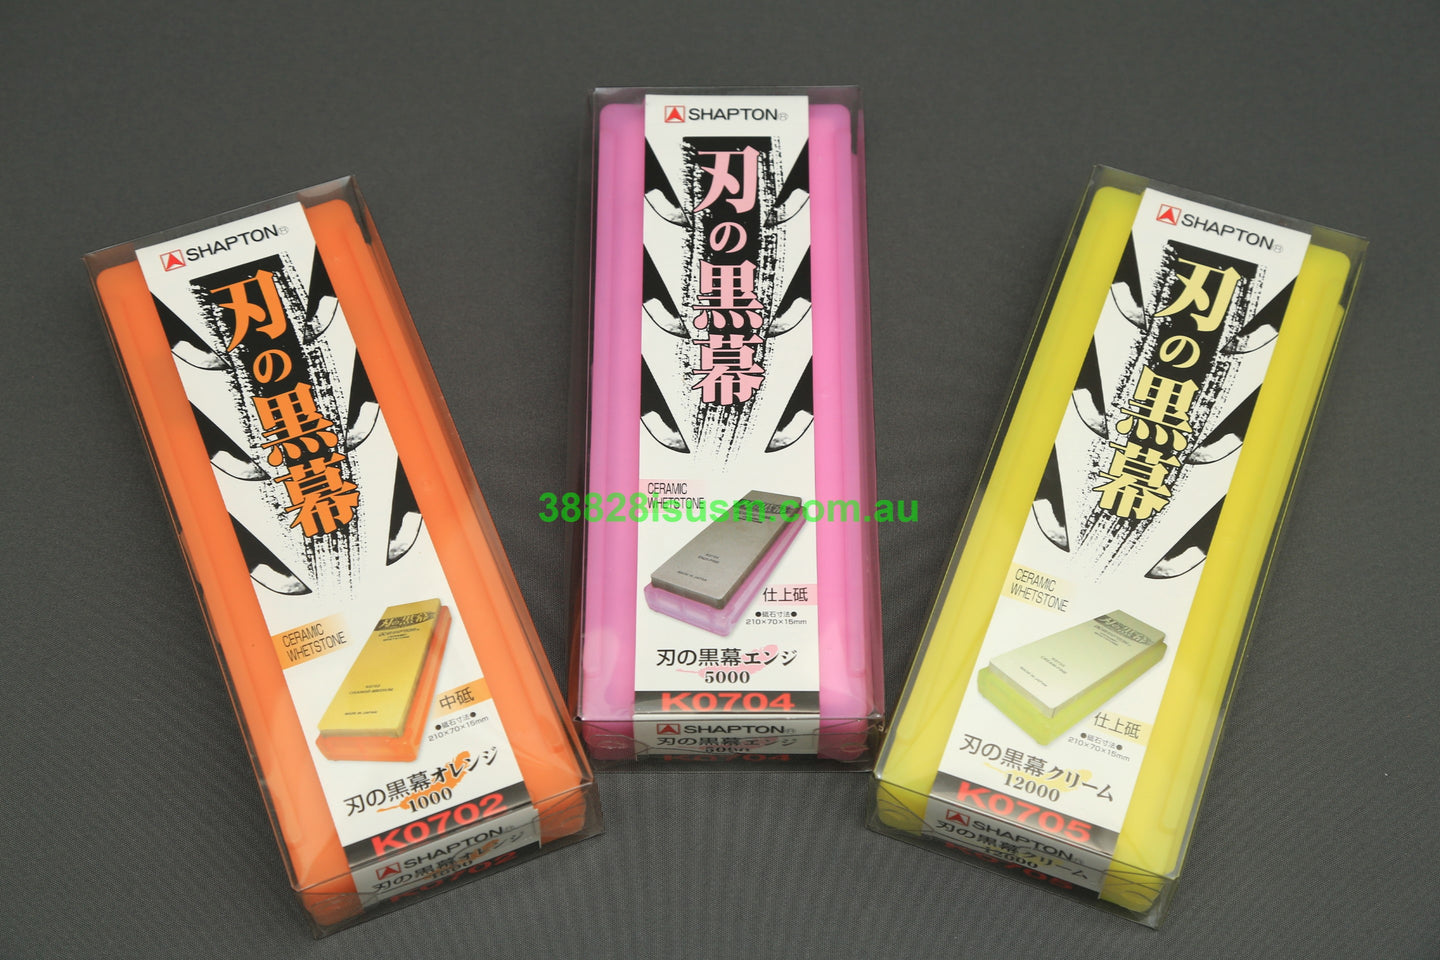 Shapton Professional/Ha-no-kuromaku Ceramic Whetstone #1000,#5000 & #12000 3pcs Combo Set MADE IN JAPAN